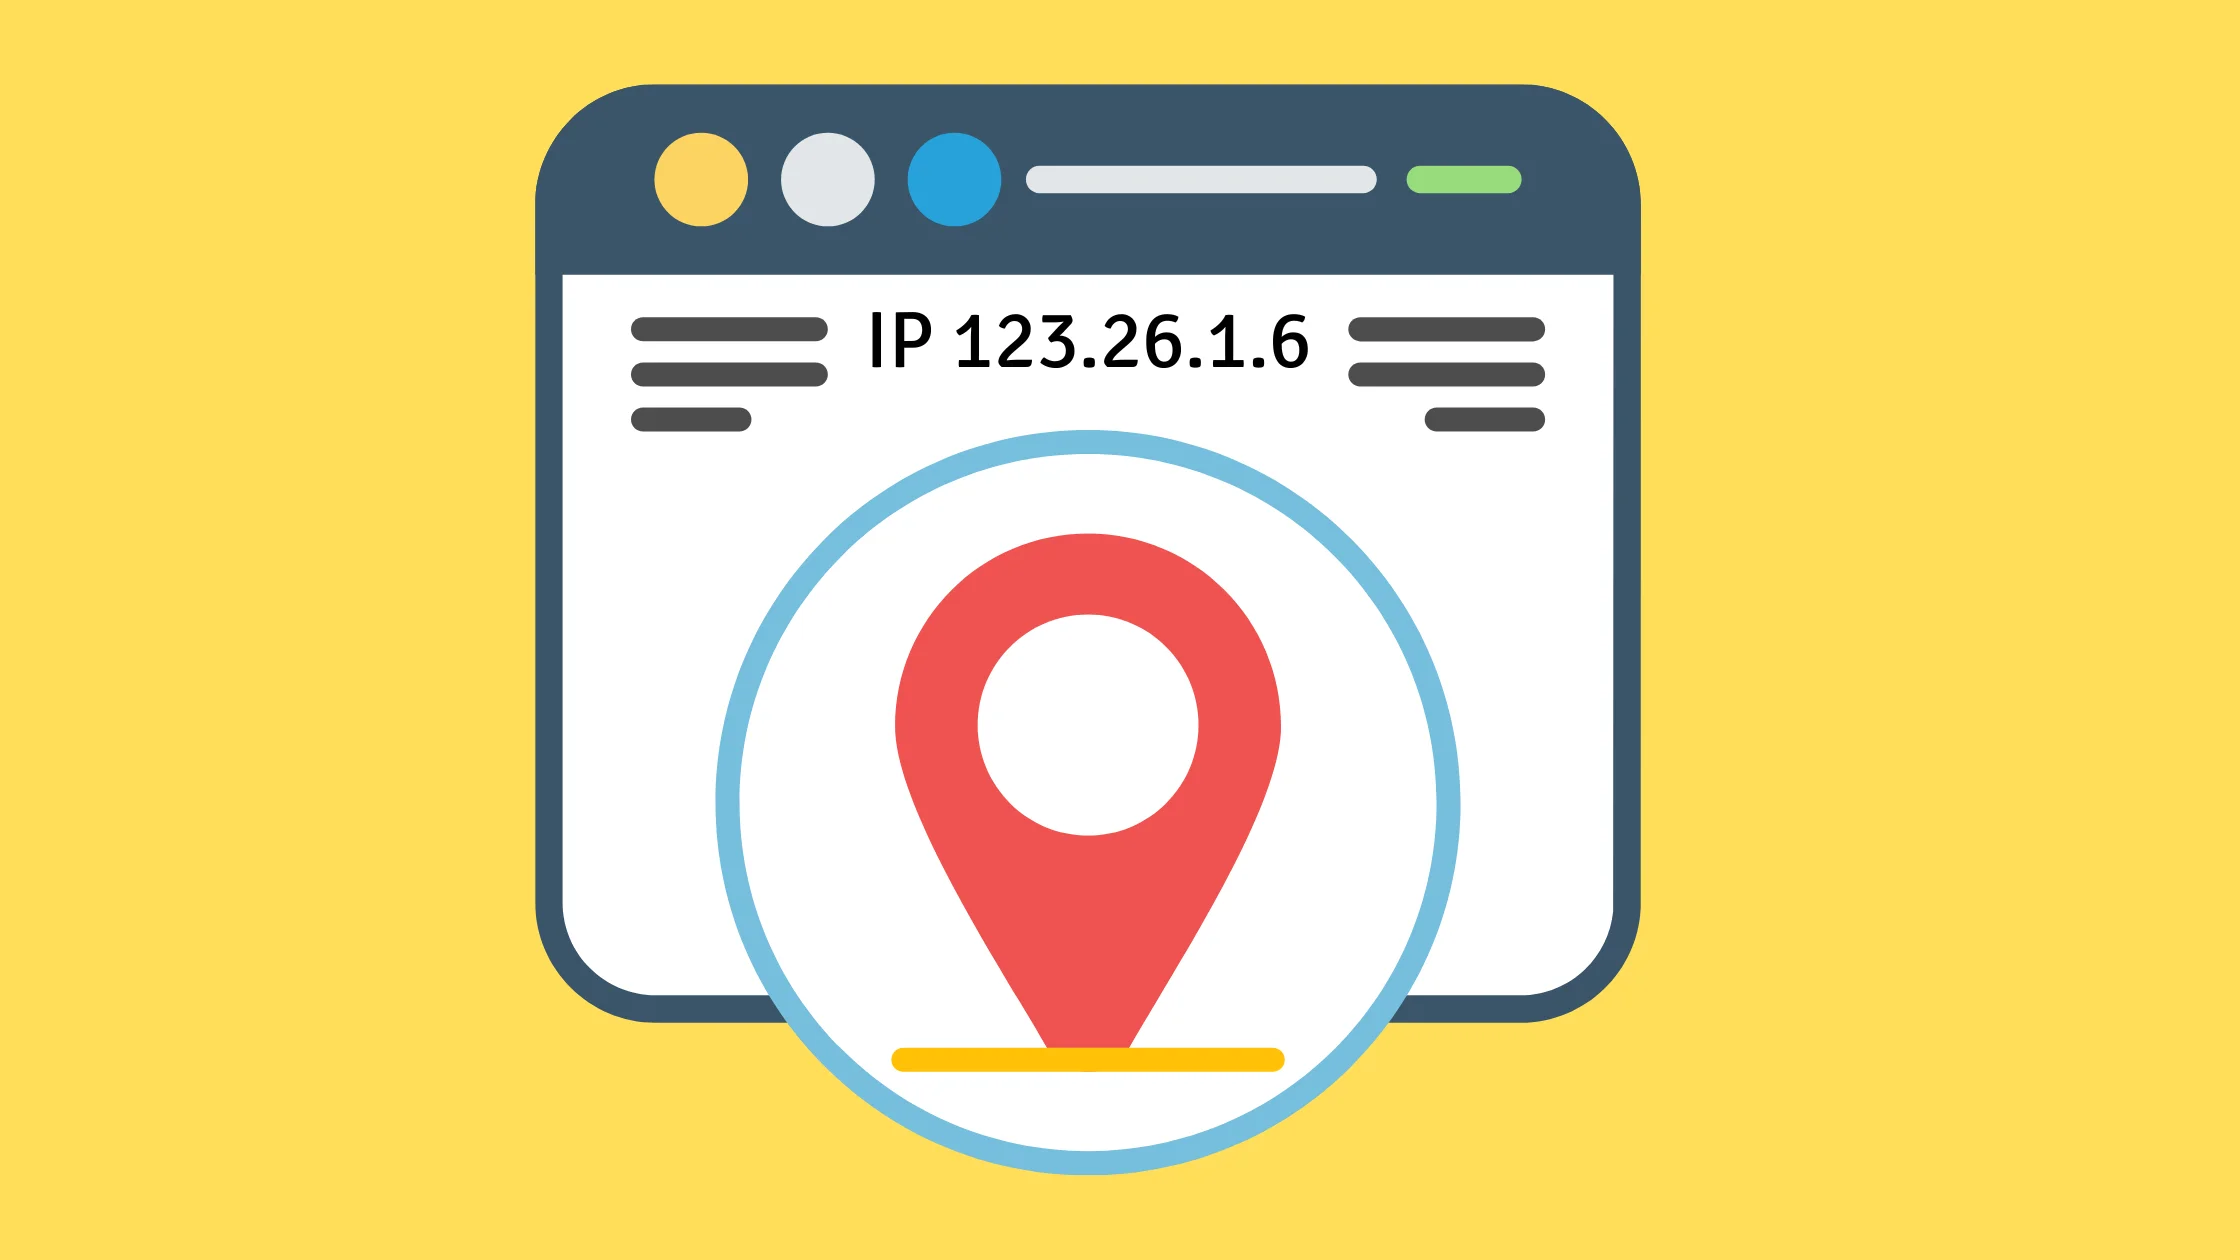 Proxy Authentication using IP address